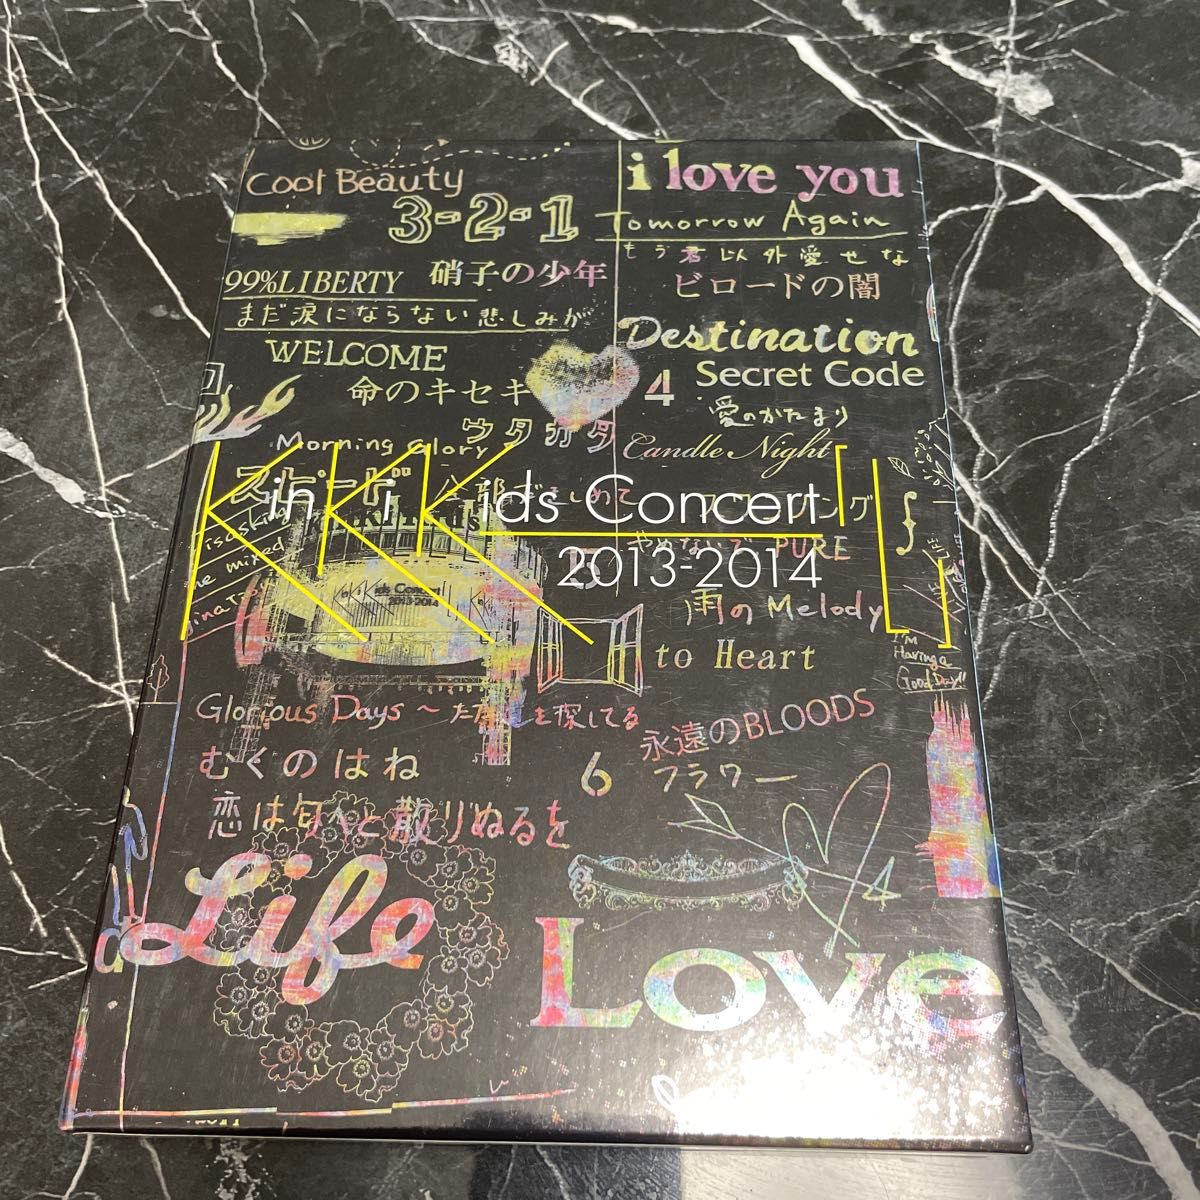 KinKi Kids Blu-ray concert 2013 2014 L 初回盤 